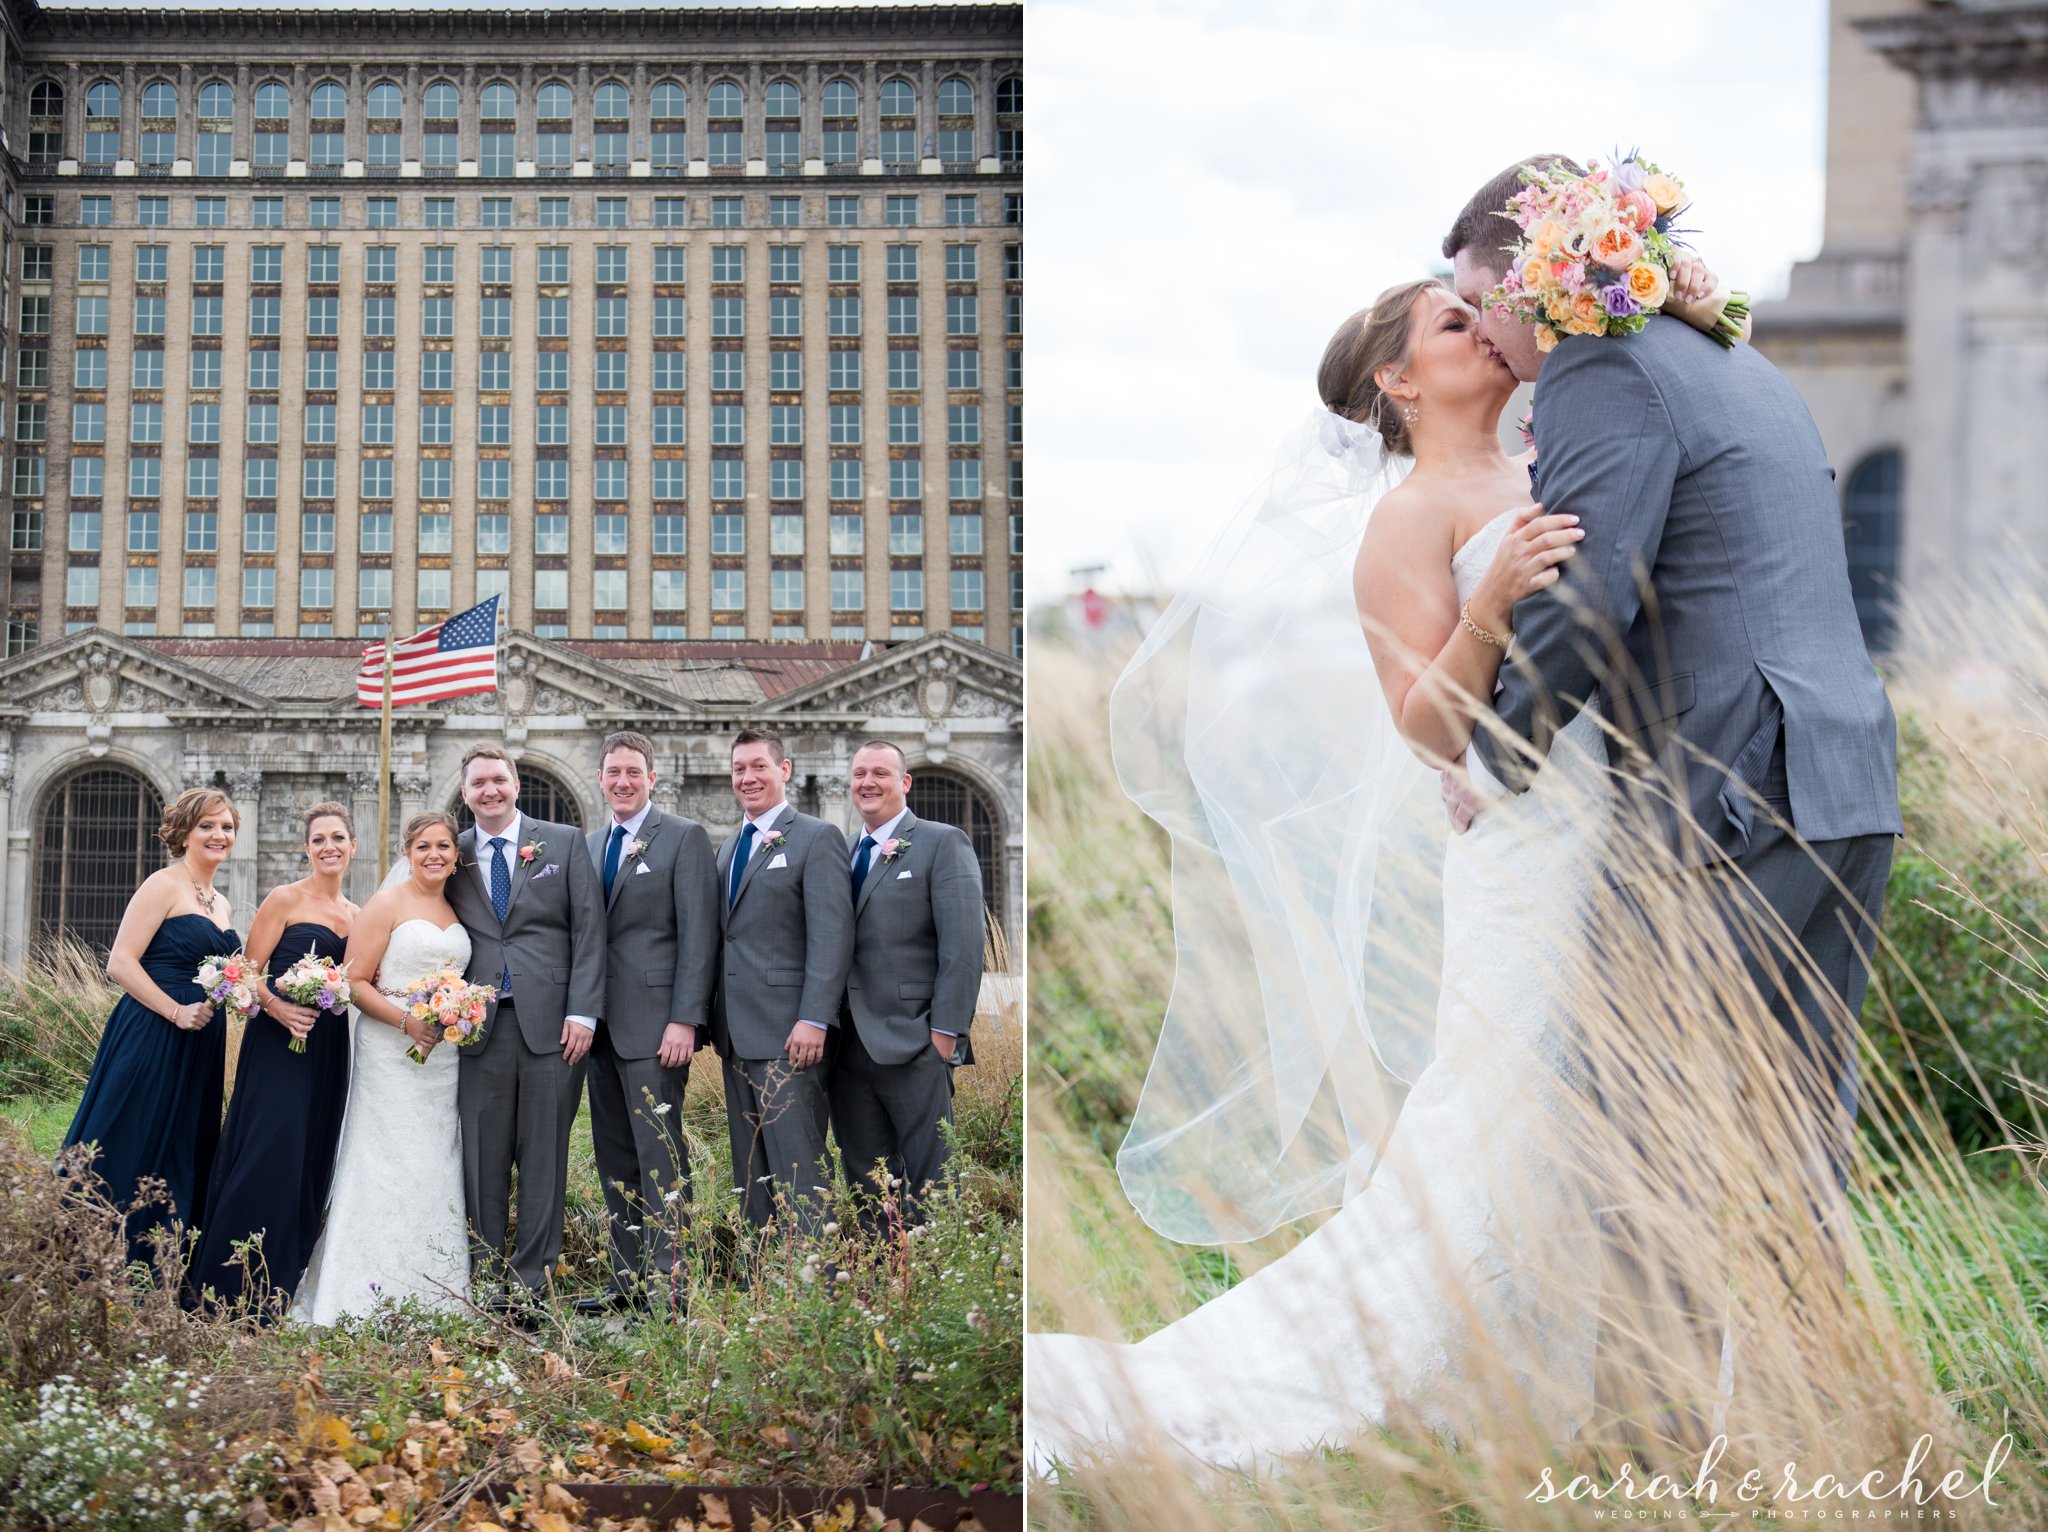 Detroit Train Station | Dearborn Inn Wedding | Detroit Michigan | Sarah and Rachel Wedding Photographers